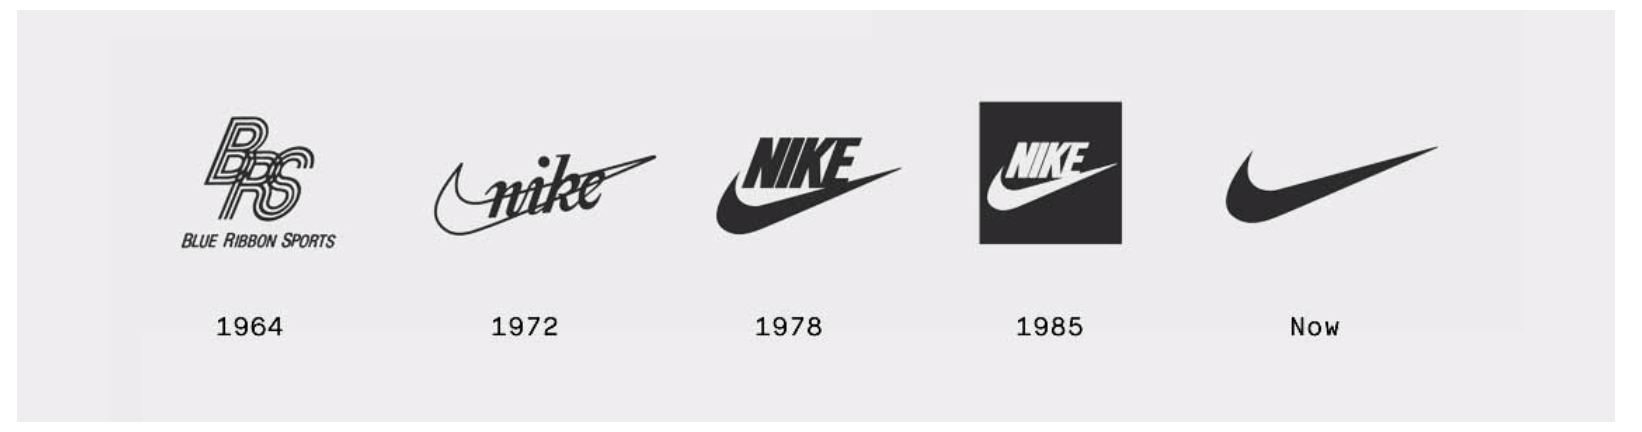 Создание найка. Nike логотип. Ребрендинг найк. Nike история логотипа. Найк фирменный стиль.